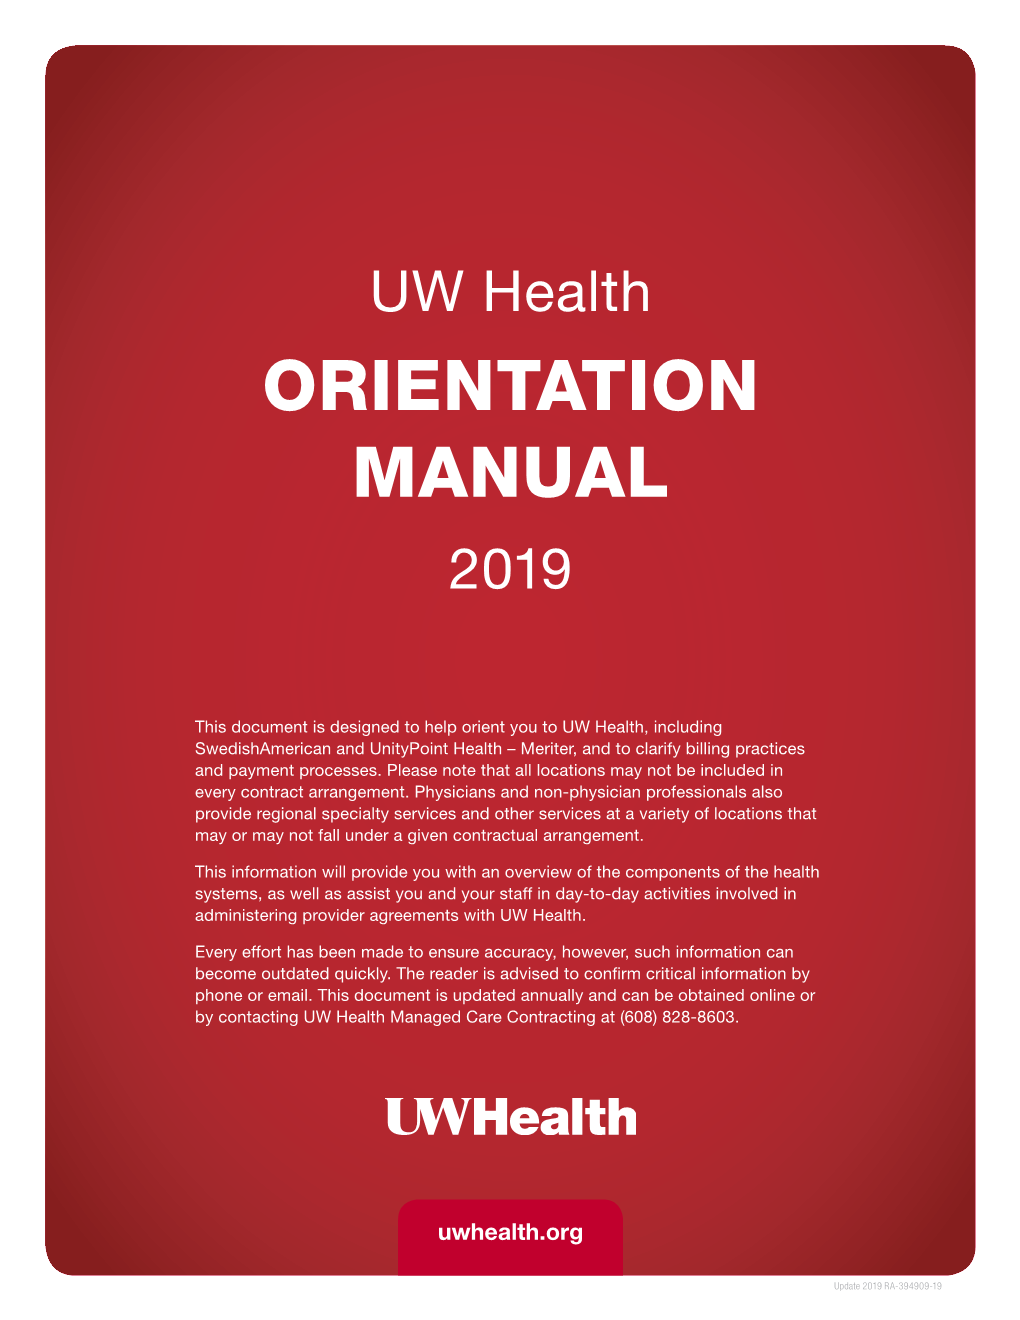 Orientation Manual 2019